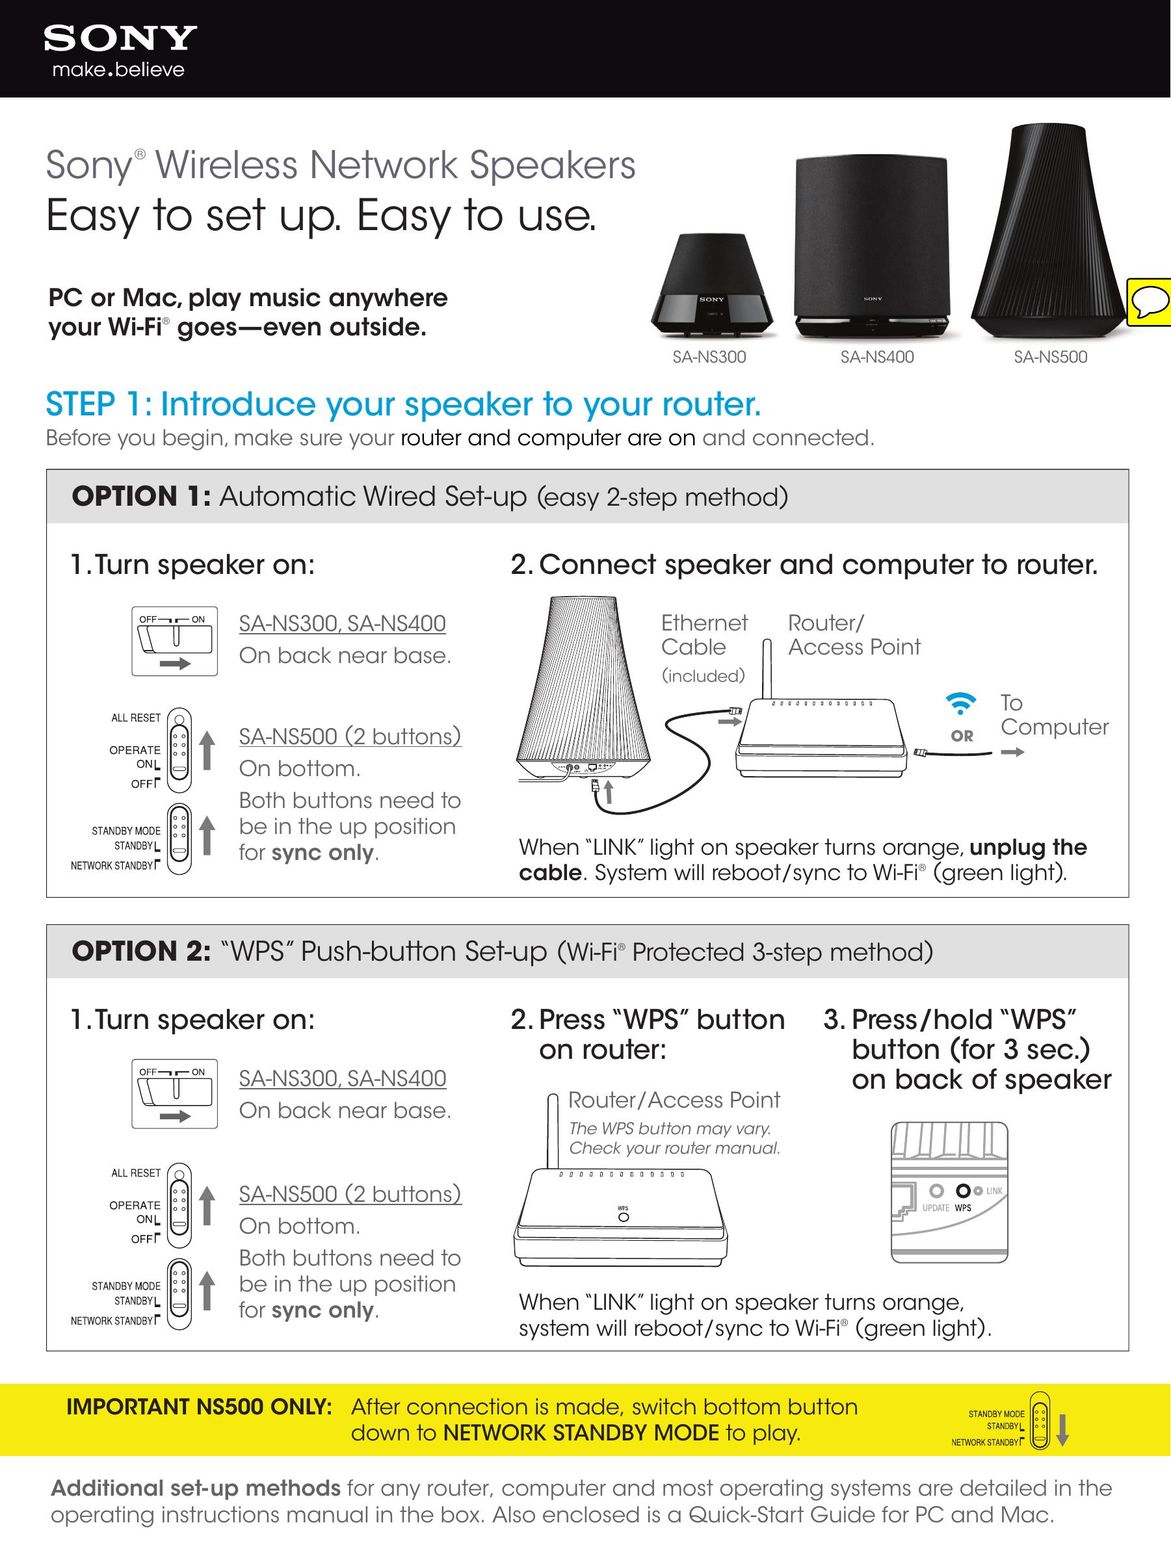 Sony SA-NS400 Speaker User Manual